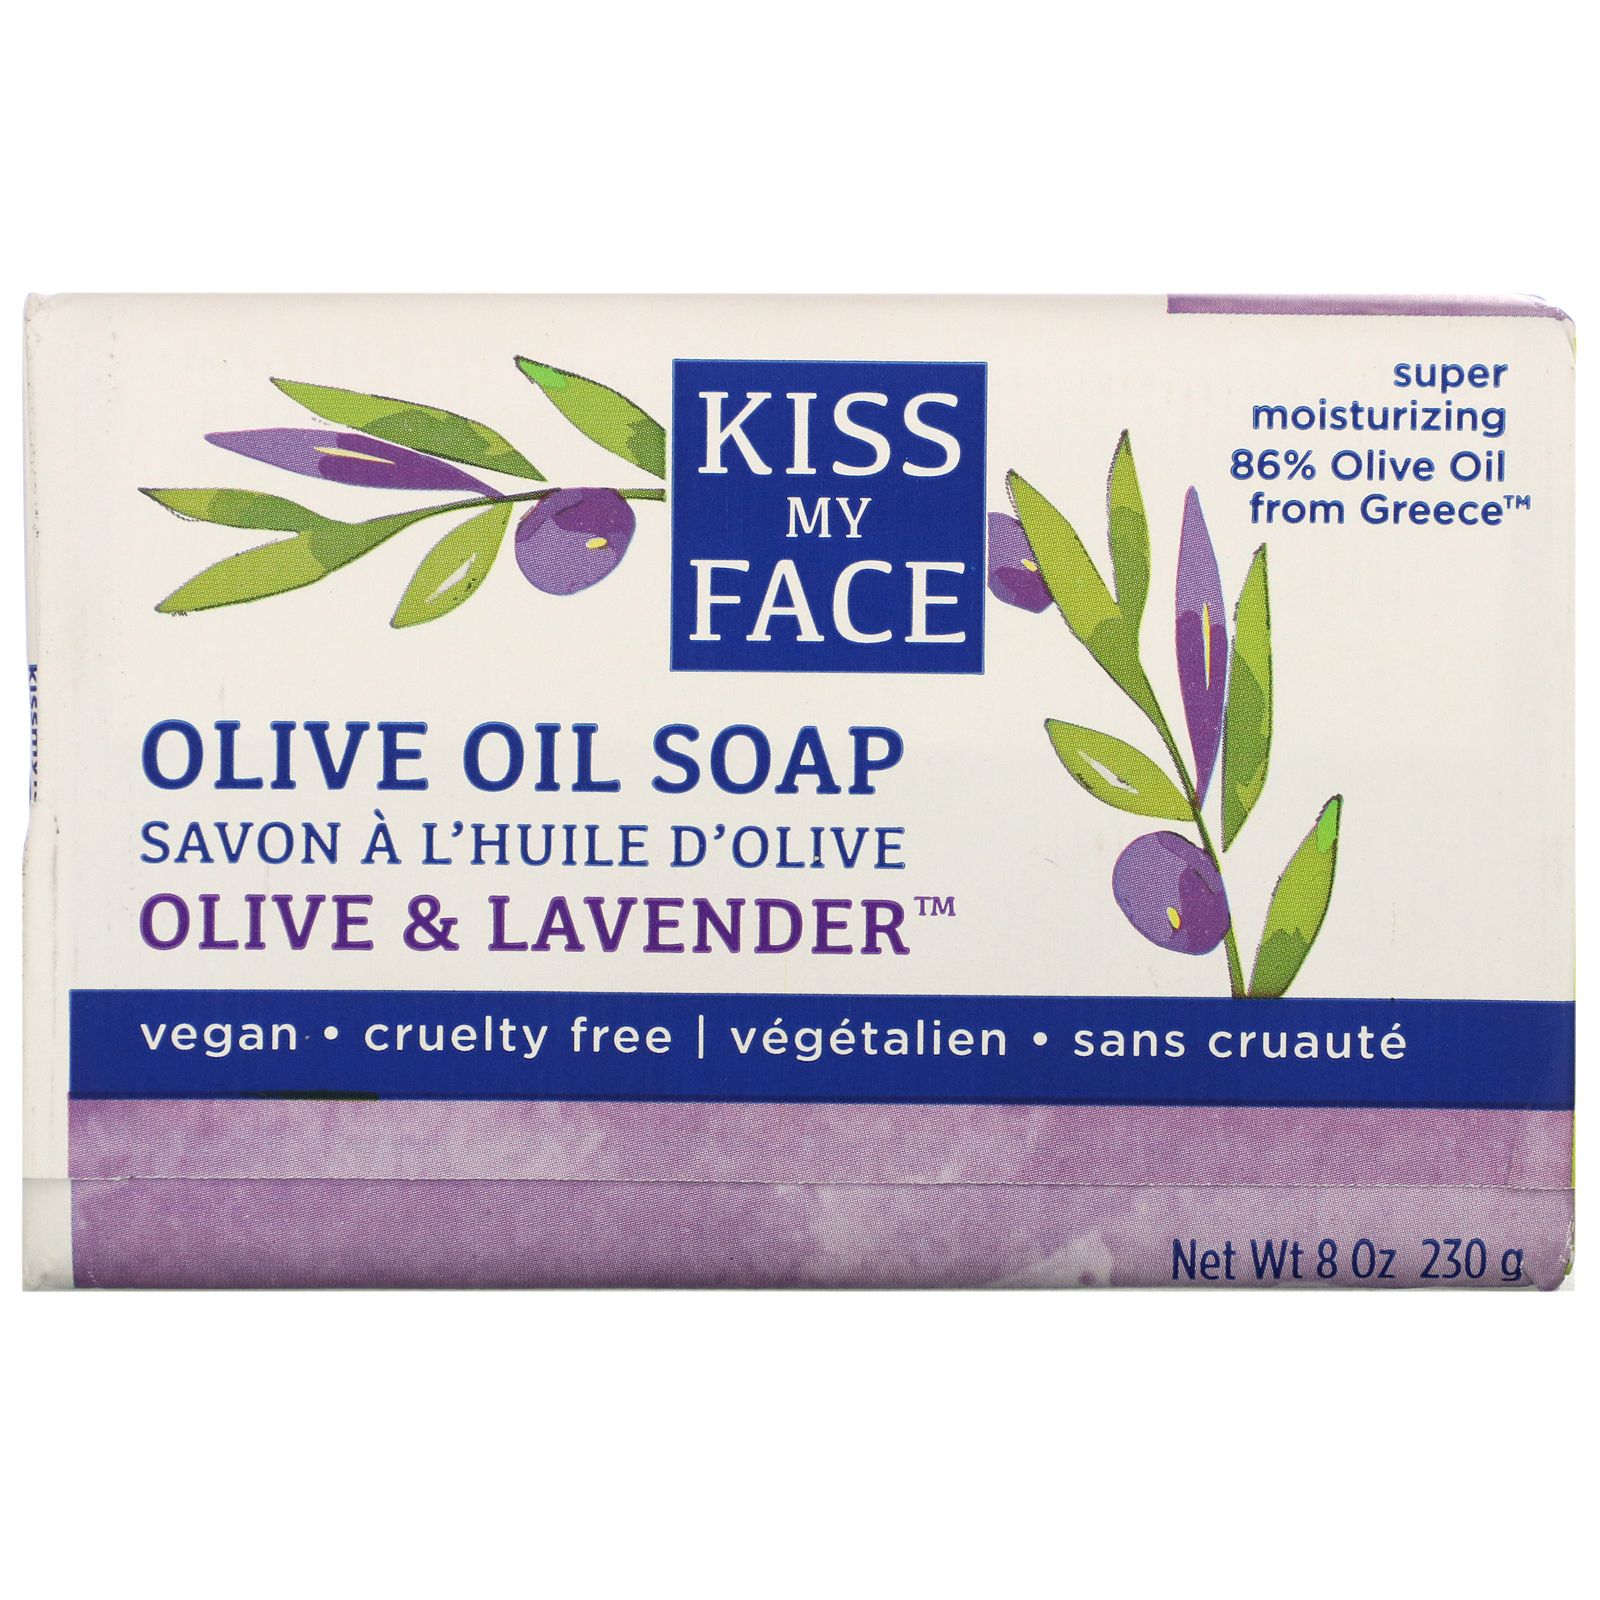 Kiss My Face Olive Oil Soap Olive & Lavender 8 oz (230 g)